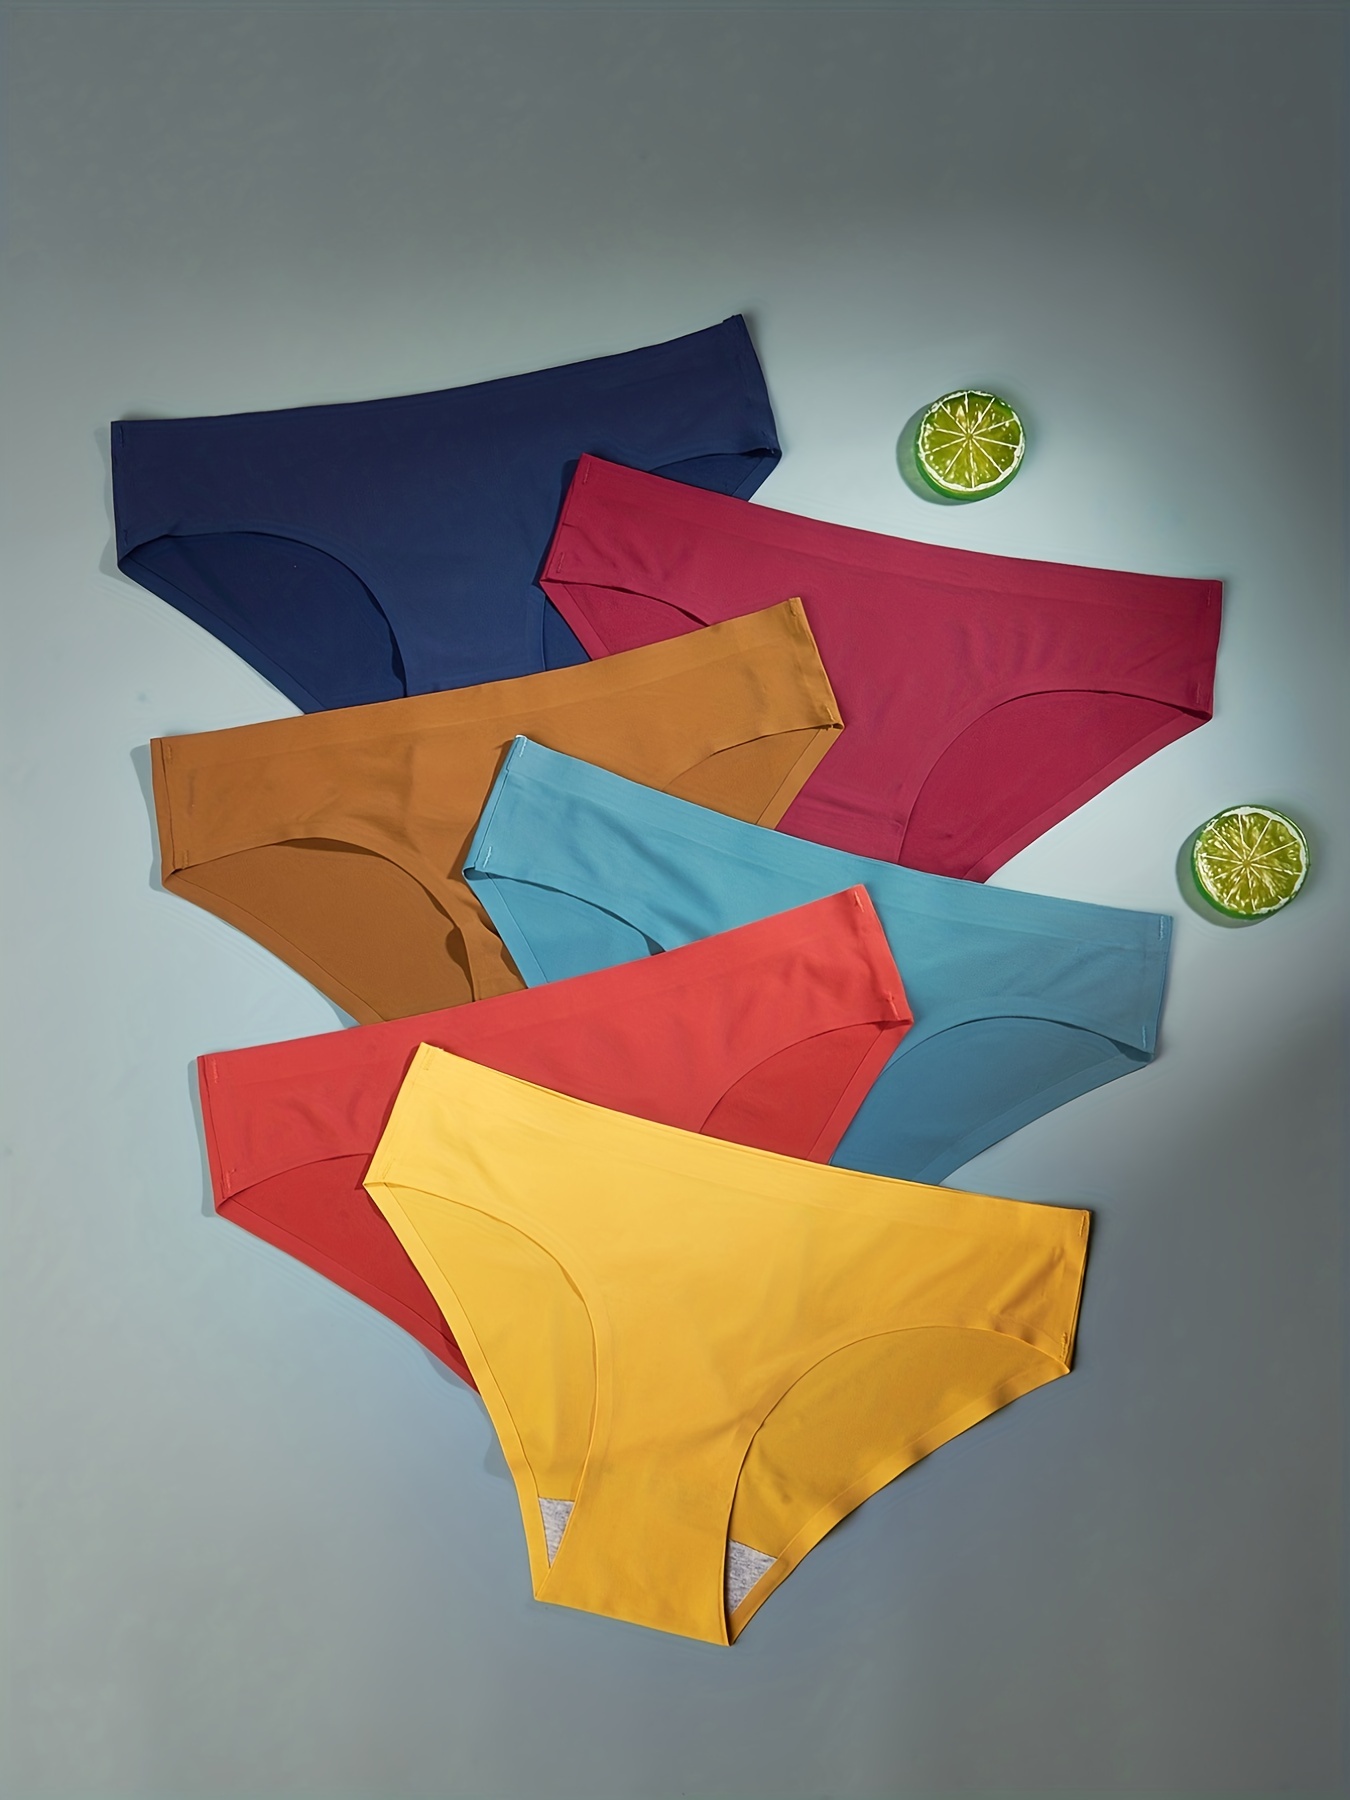 7 Pack Nylon Seamless Bikini Panties, Multicolor Pack And Low Waist,  Women's Underwear & Lingerie